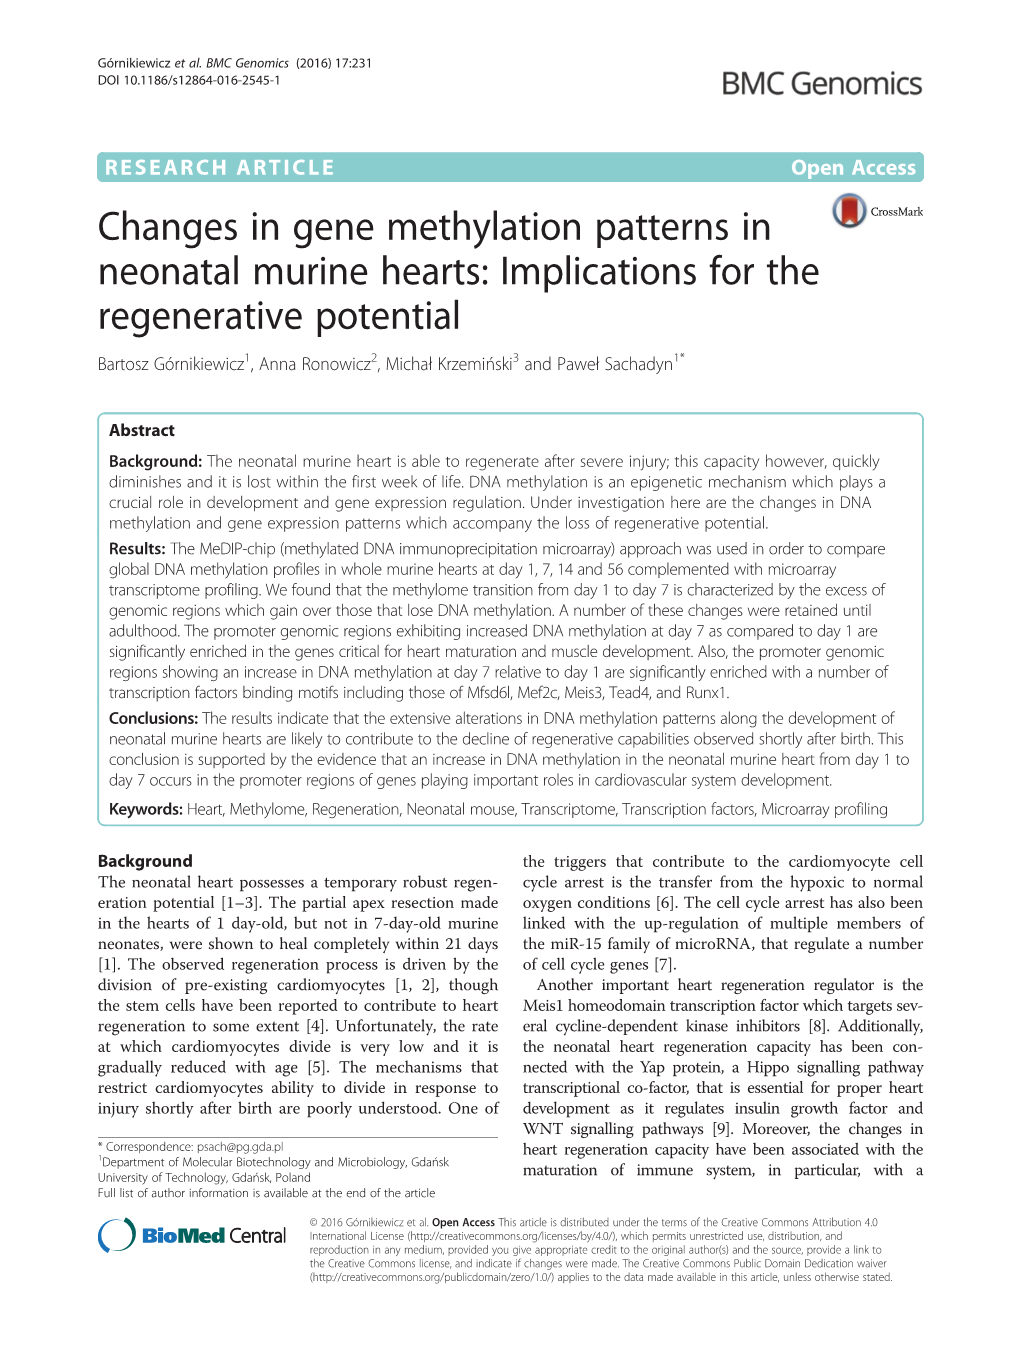 Changes in Gene Methylation Patterns in Neonatal Murine Hearts